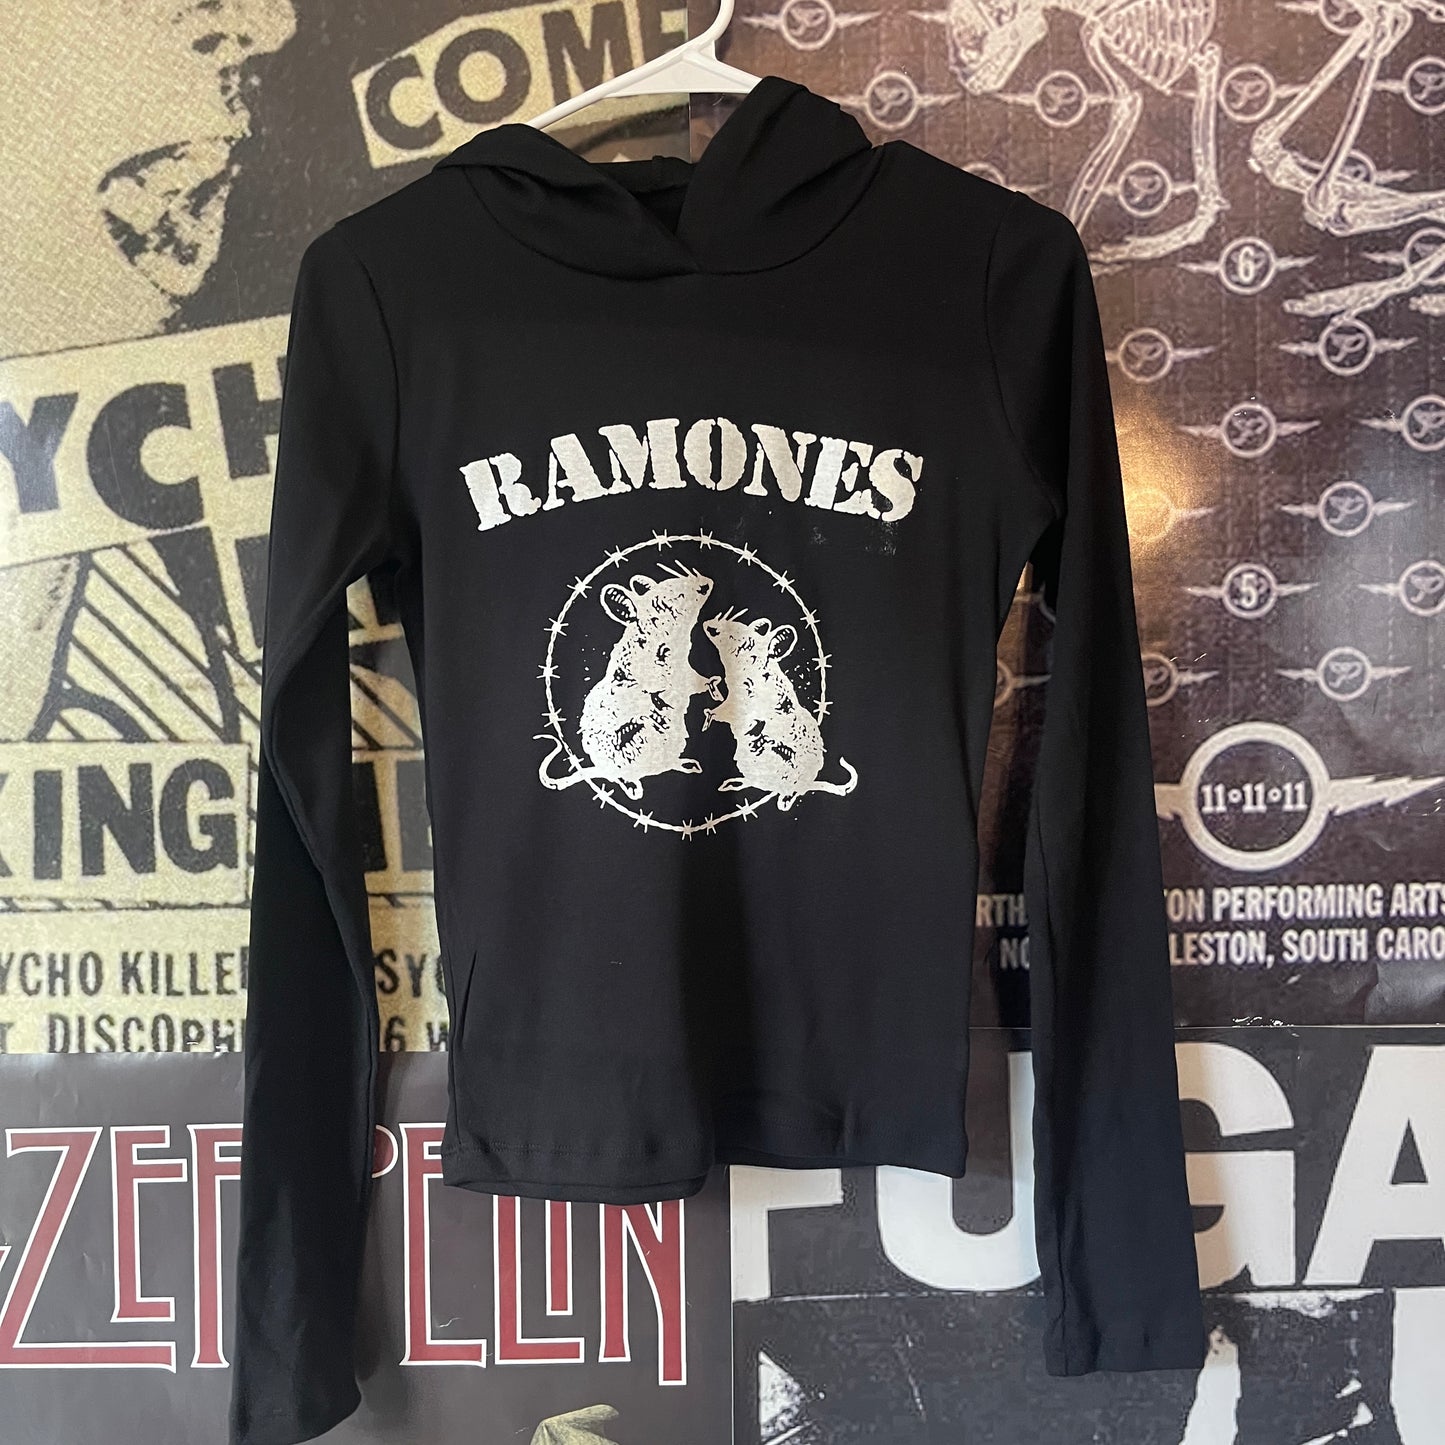 Ramones black hooded baby style long sleeve SM/MED